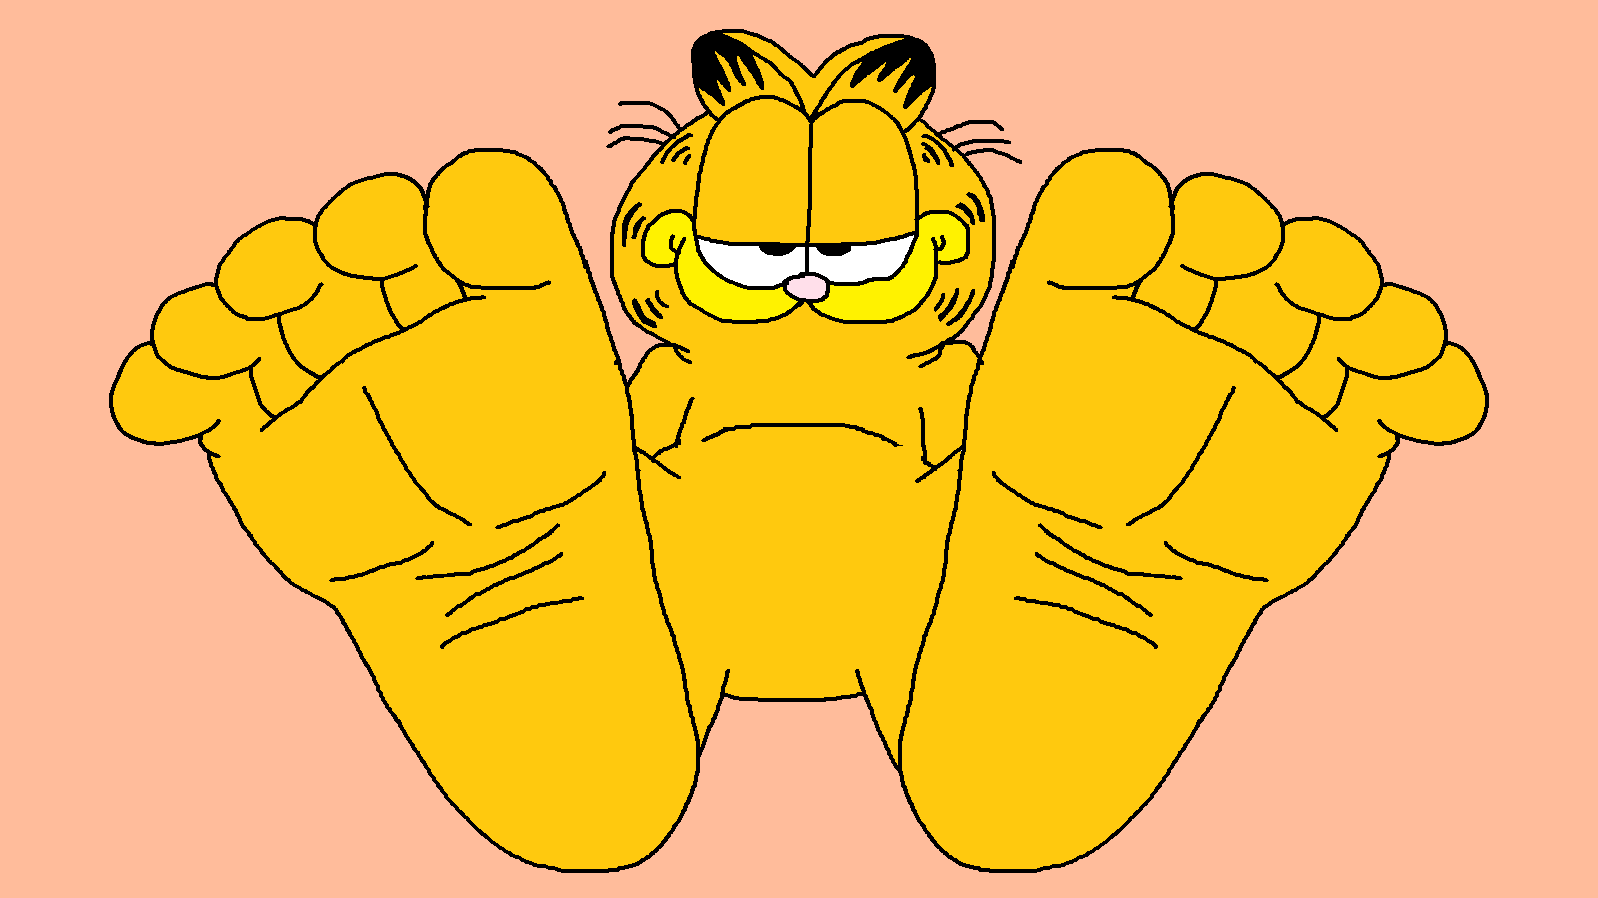 Garfield arlene feet